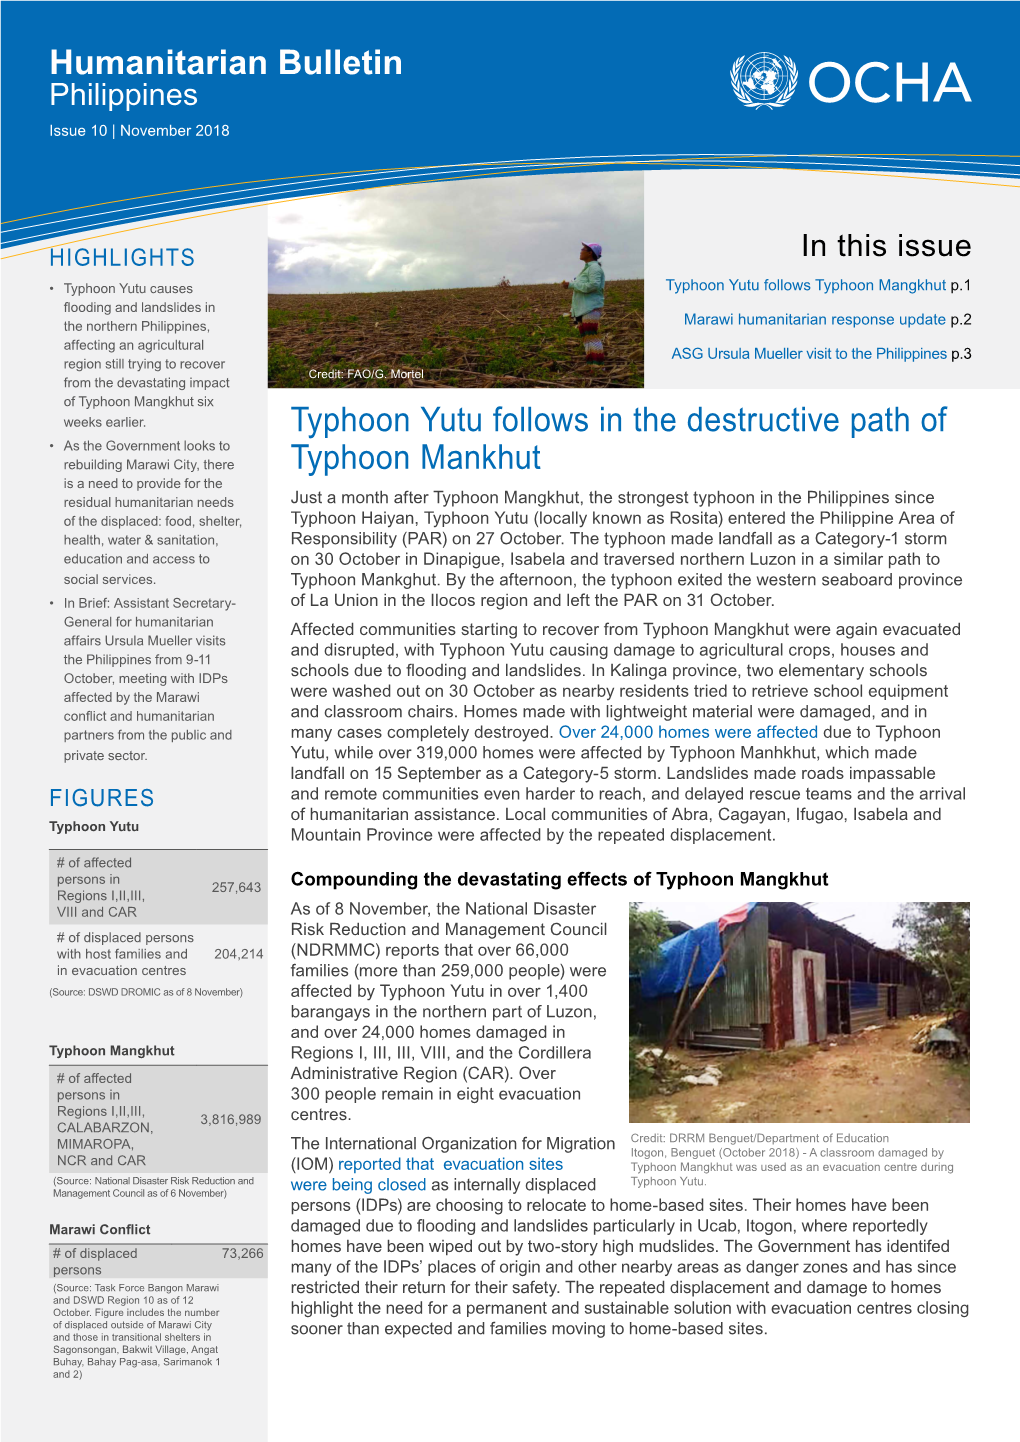 Humanitarian Bulletin Typhoon Yutu Follows in the Destructive Path Of